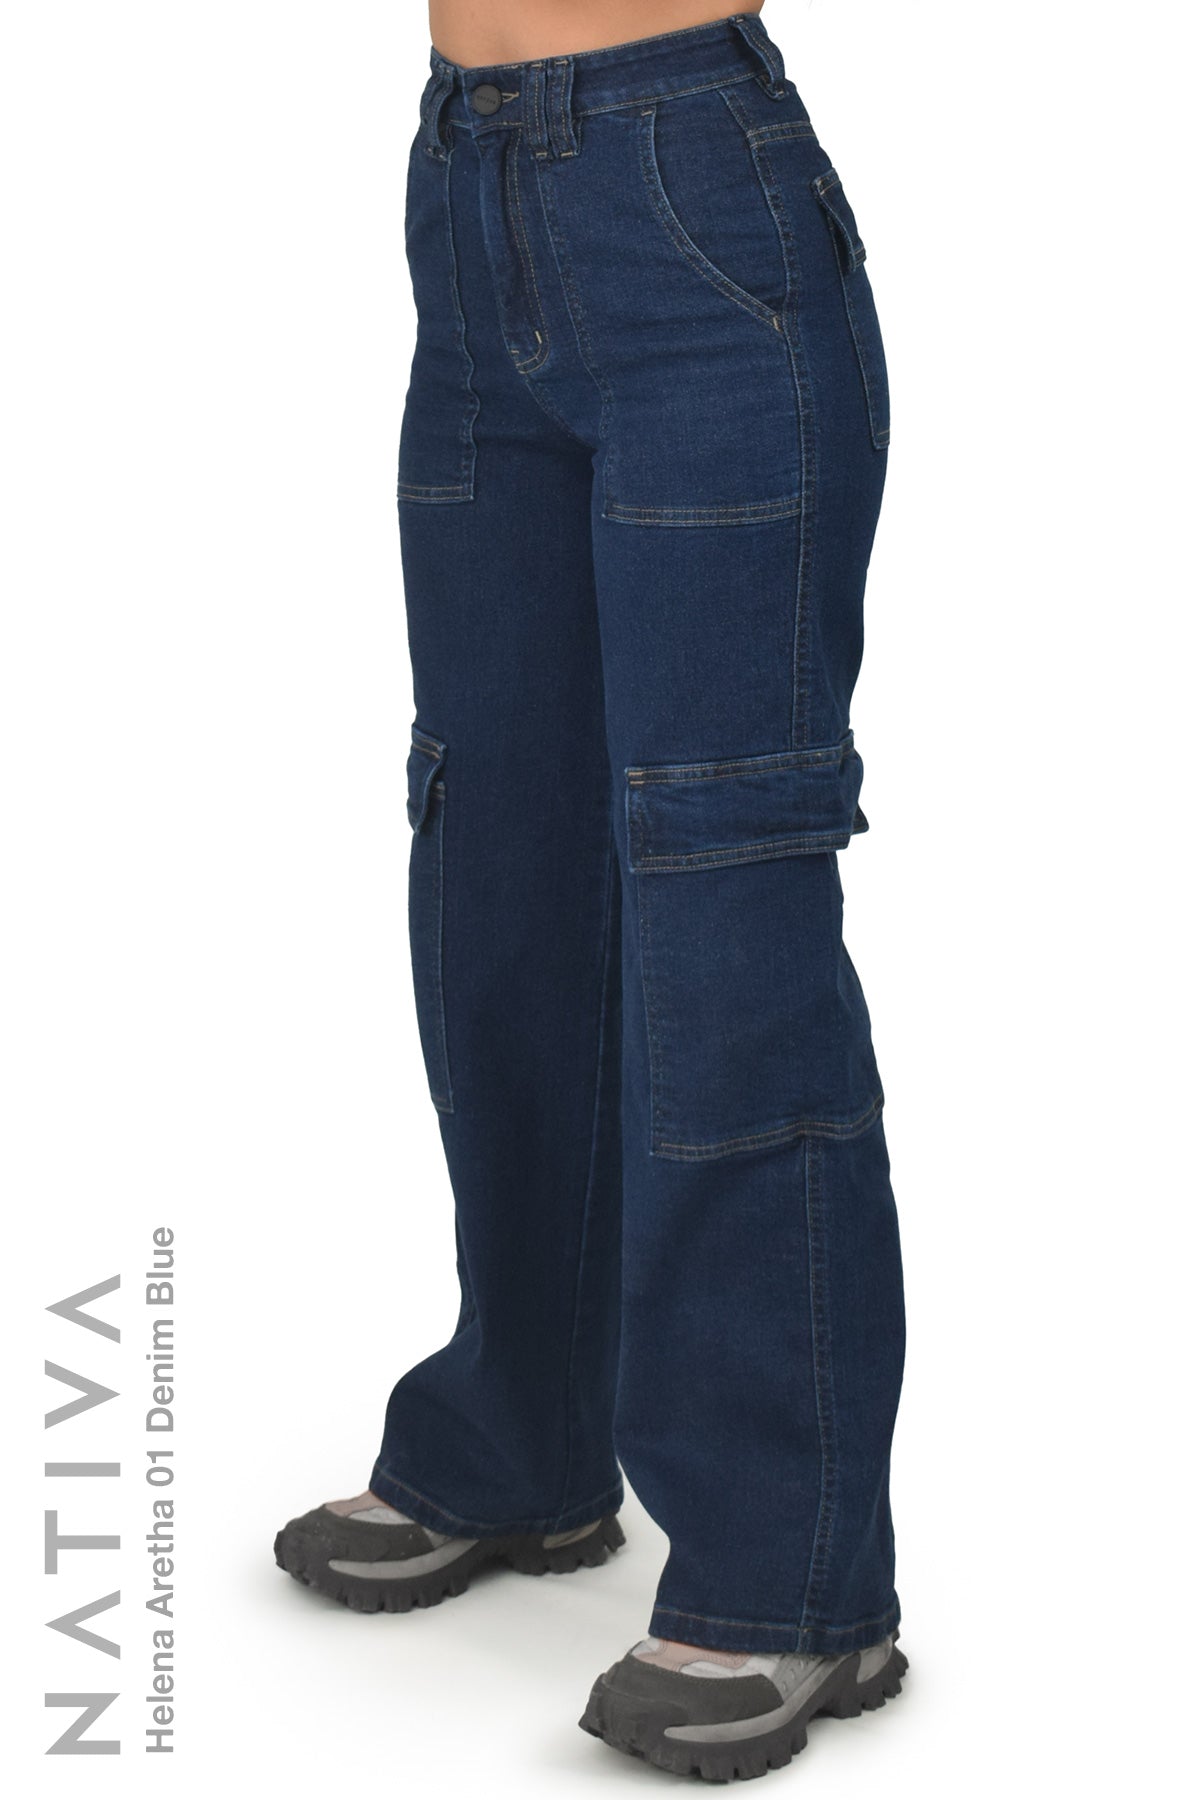 Salopete Jeans, MIX NATIVA - ADvestir